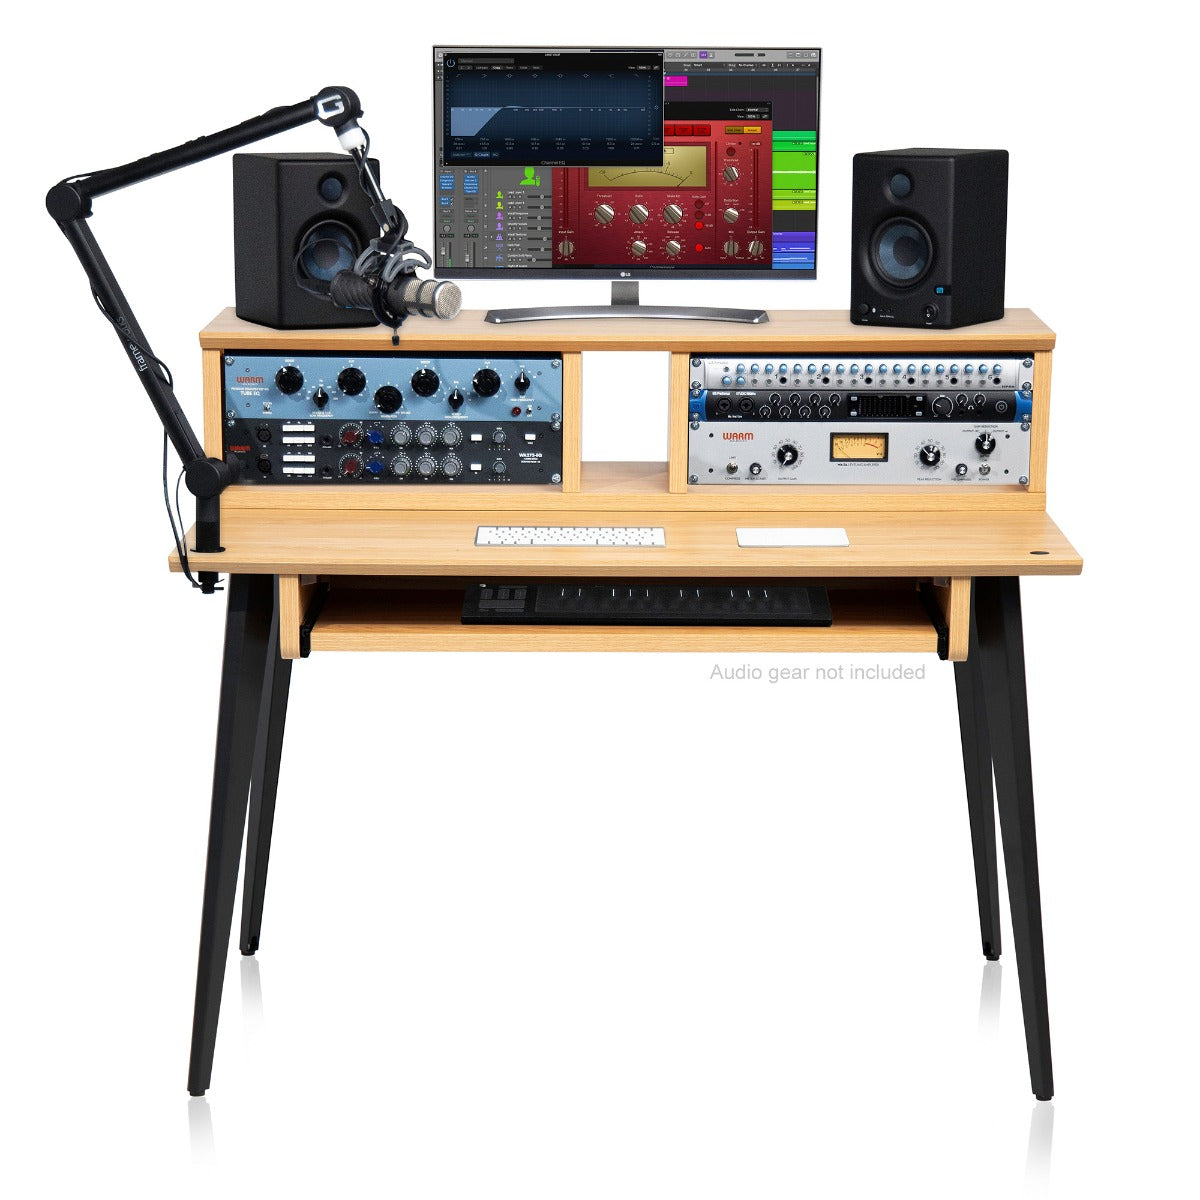 Gator Frameworks Elite Series Furniture Desk - Maple with audio gear installed